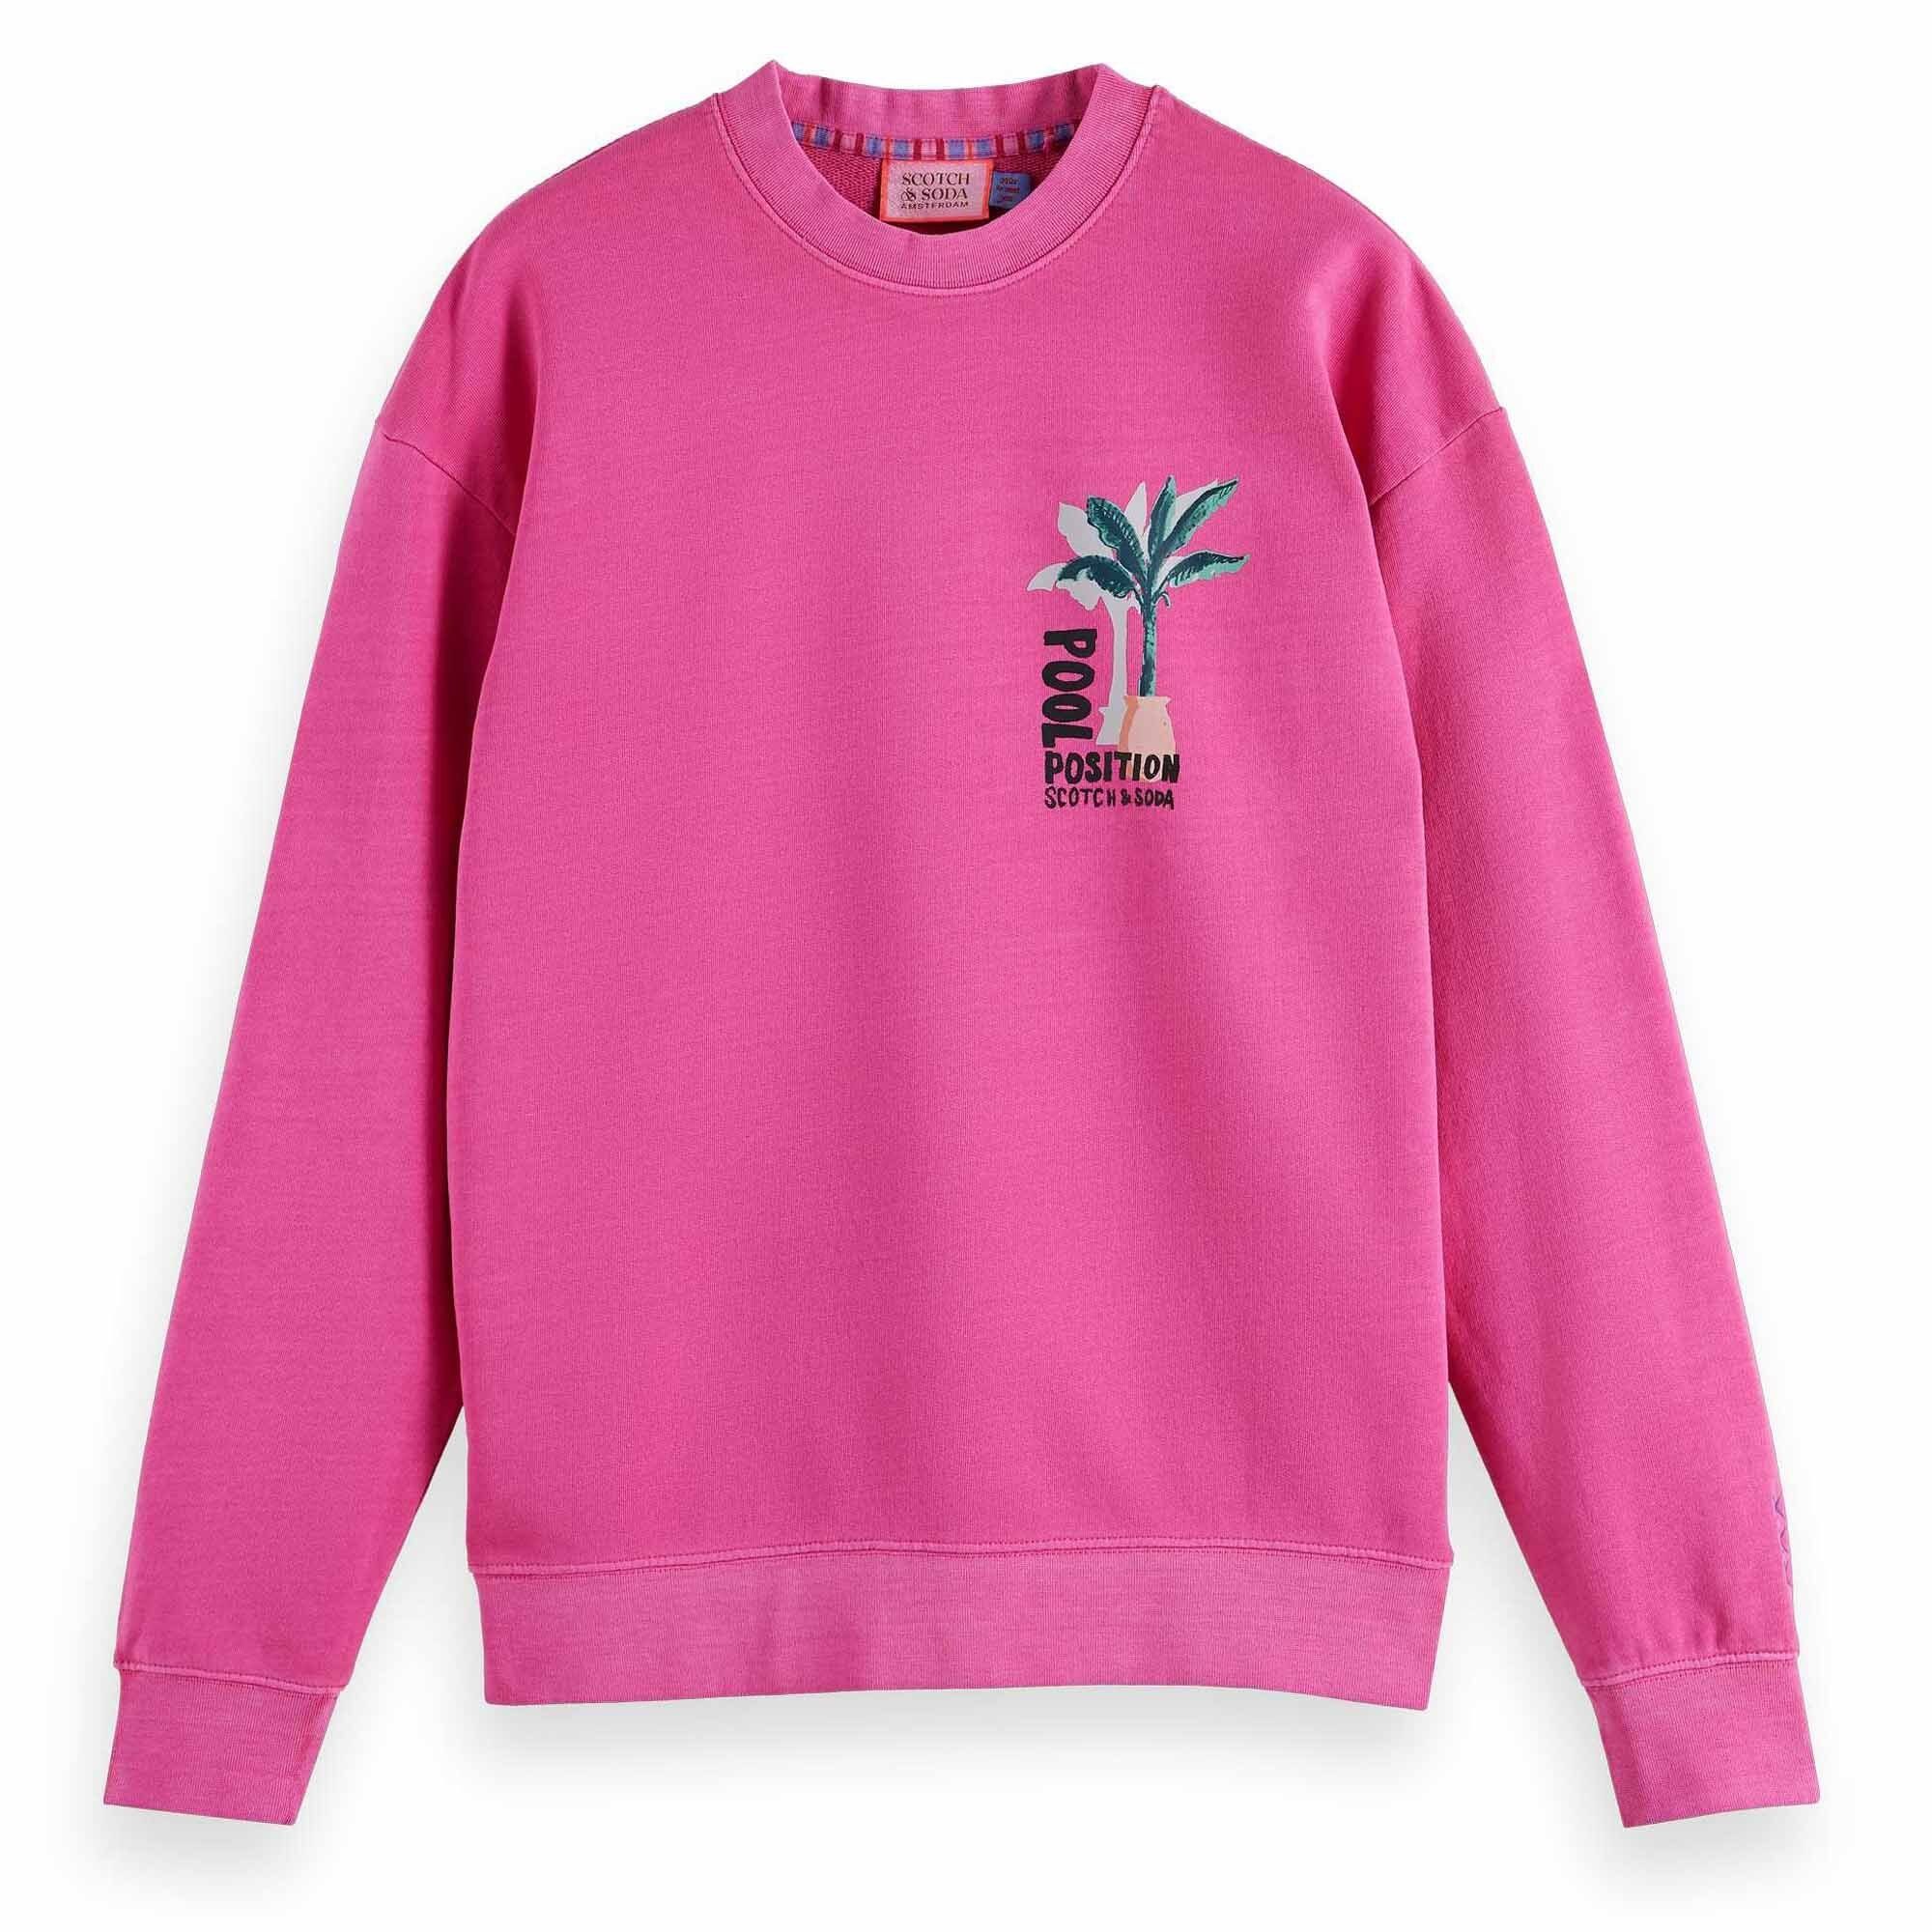 Scotch & Soda Sweatshirt Herren Sweatshirt - Printed Sweatshirt, Rundhals Pink